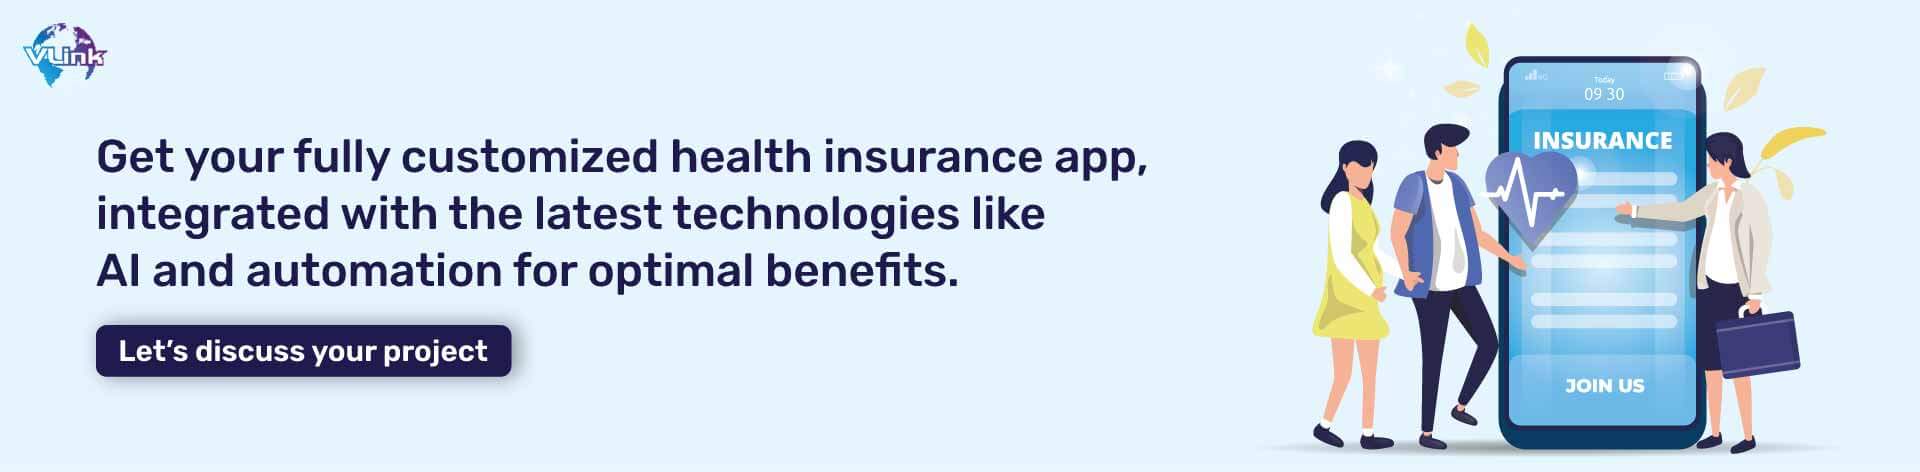 health-insurance-app-development-cta